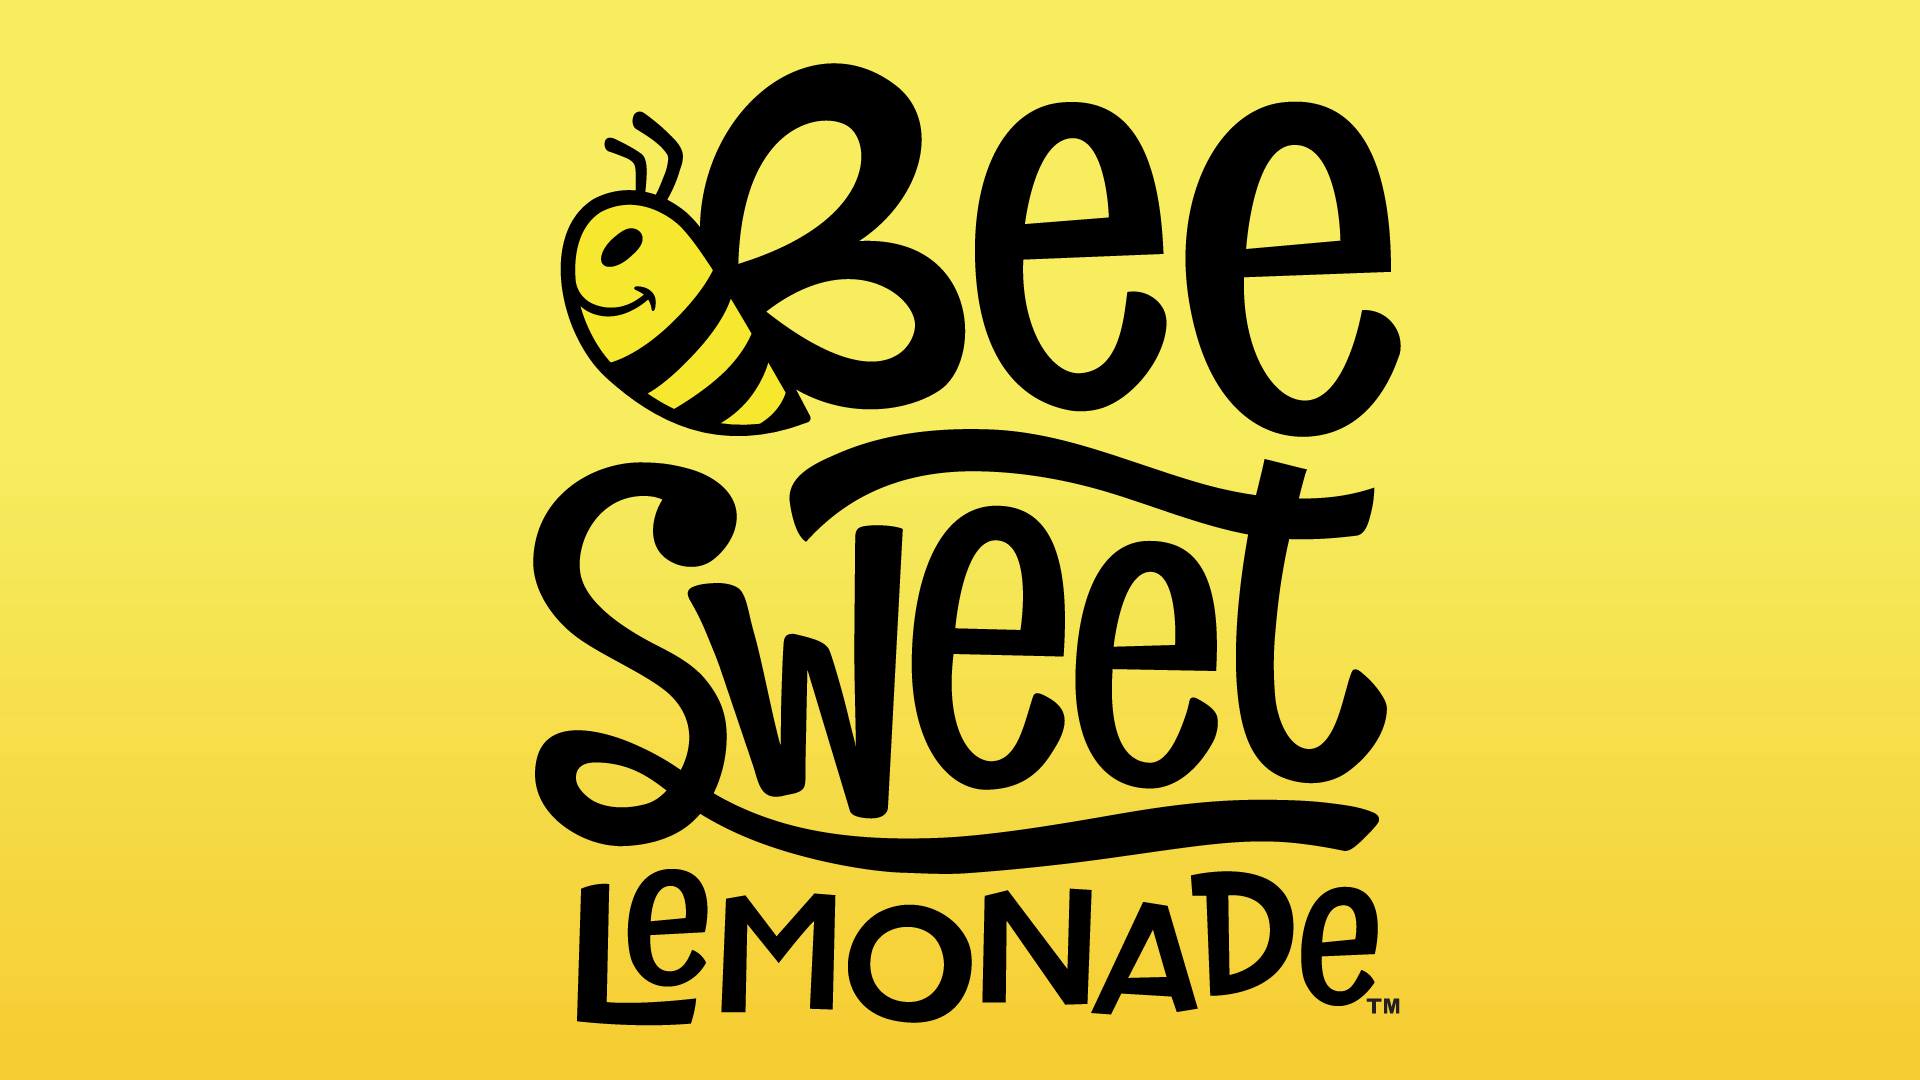 Me & The Bees Lemonade